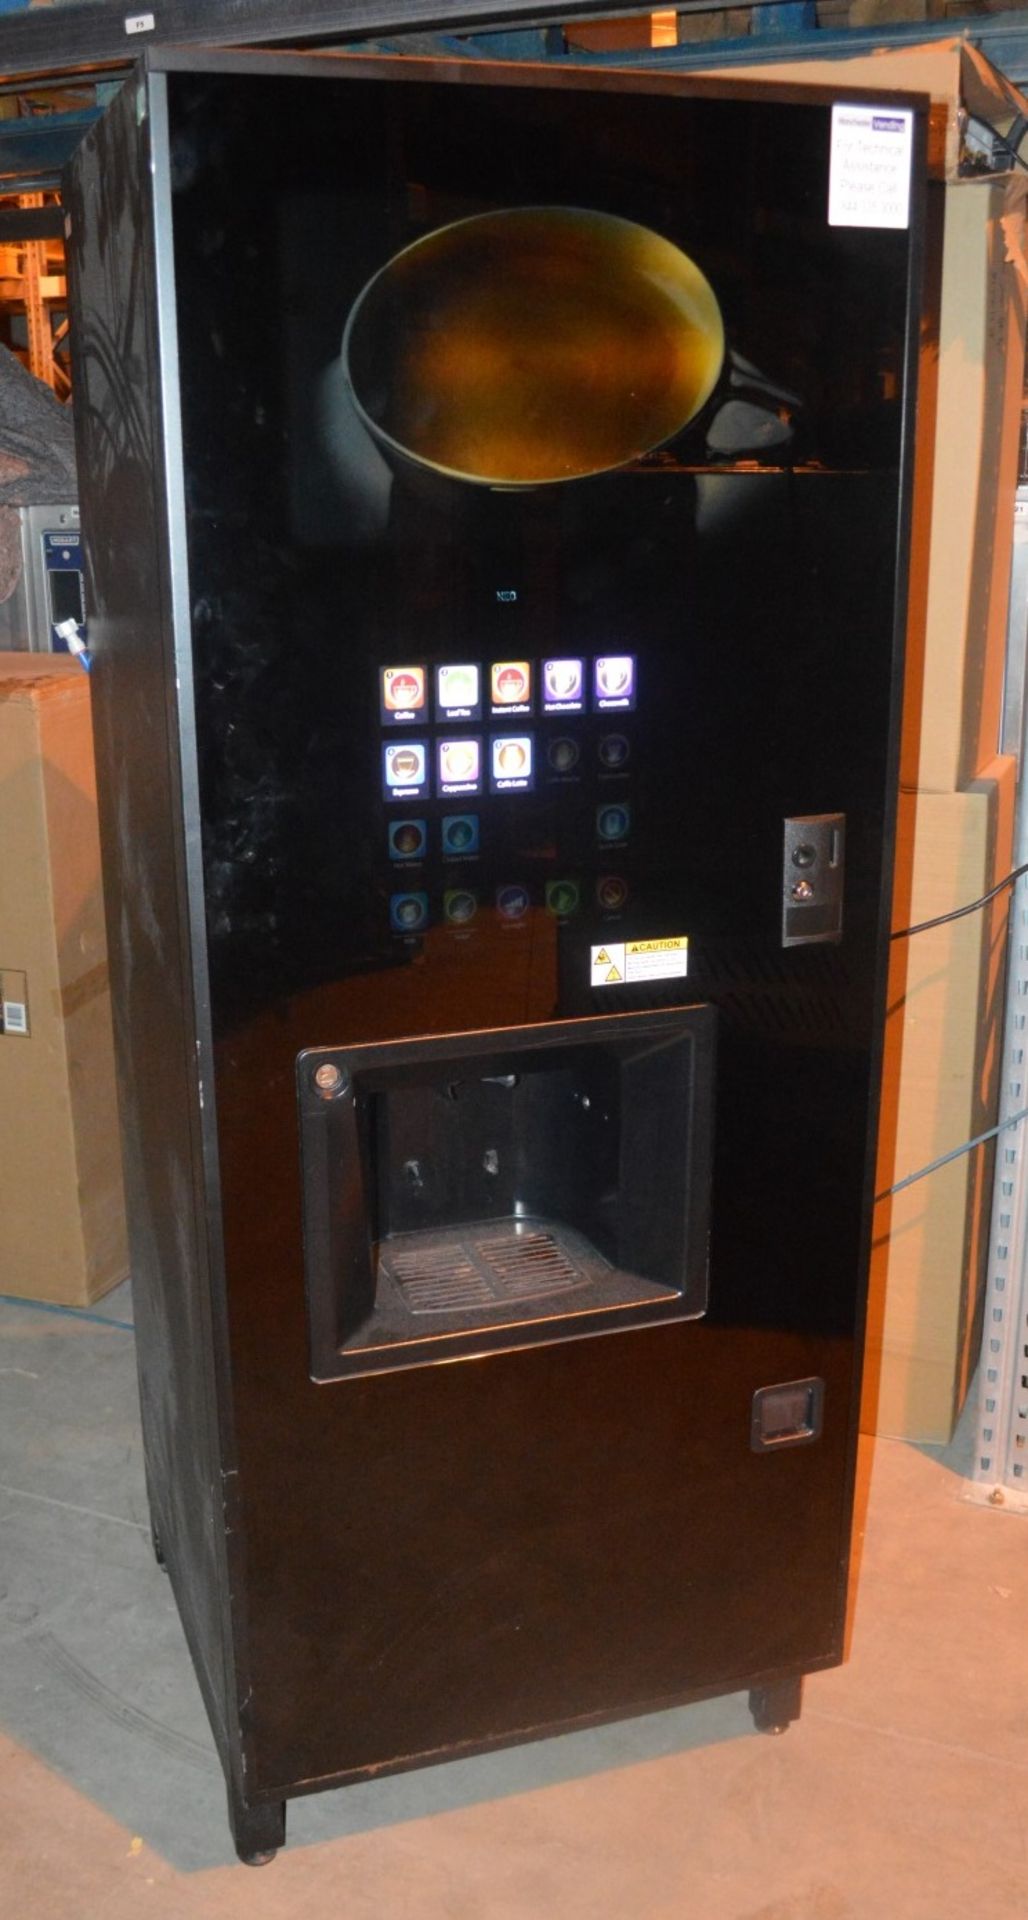 1 x COFFEETEK Touch Screen Instant Hot Drink Vending Machine - Model: Neo B2C (INSTANT TEA) CDS - Ve - Image 6 of 9